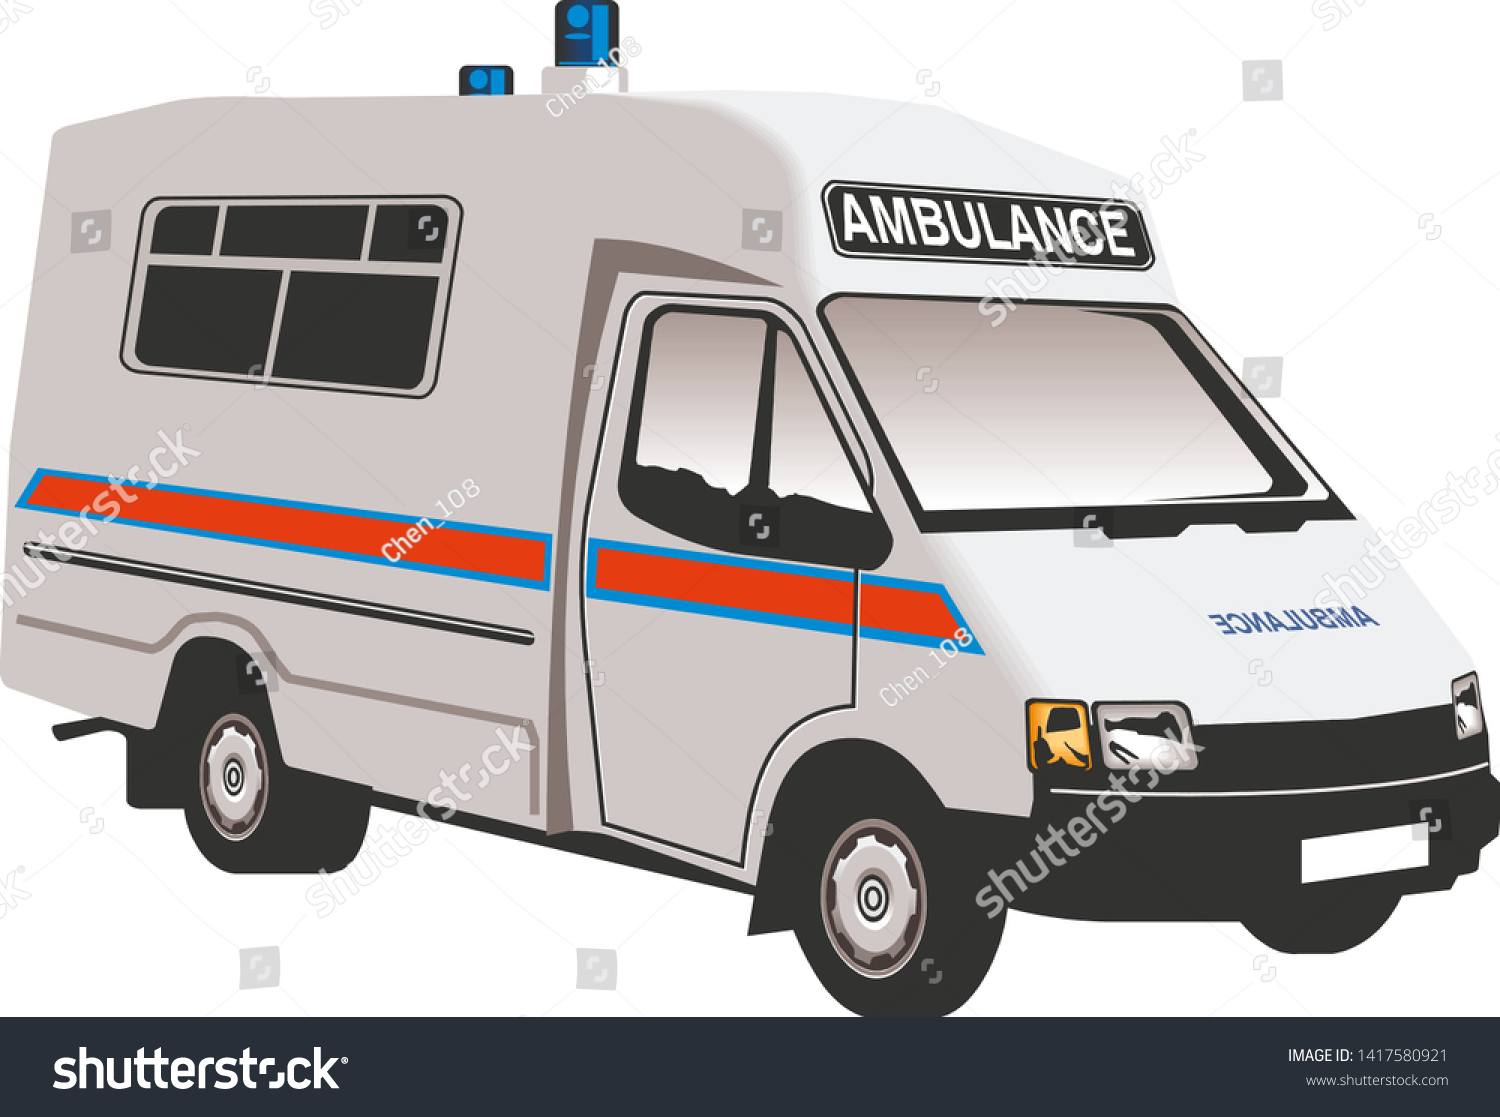 Рисунок скорой помощи